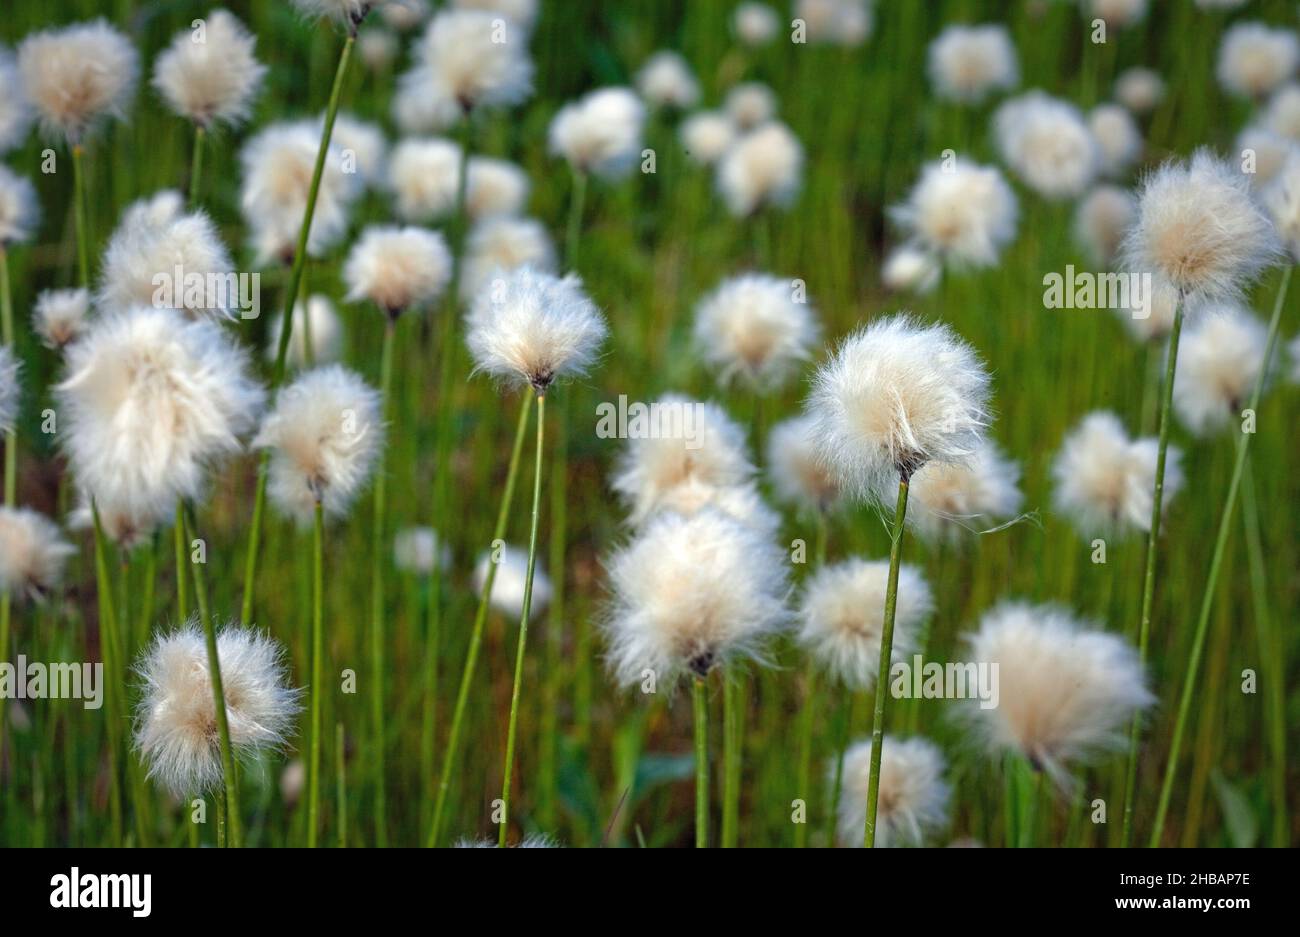 Eriophorum di cotone Grass sp. Denali National Park & Preserve Alaska, Stati Uniti d'America Una versione unica e ottimizzata di un'immagine di fiori selvatici da NPS Ranger JW Frank; Credit: NPS/Jacob W. Frank Foto Stock